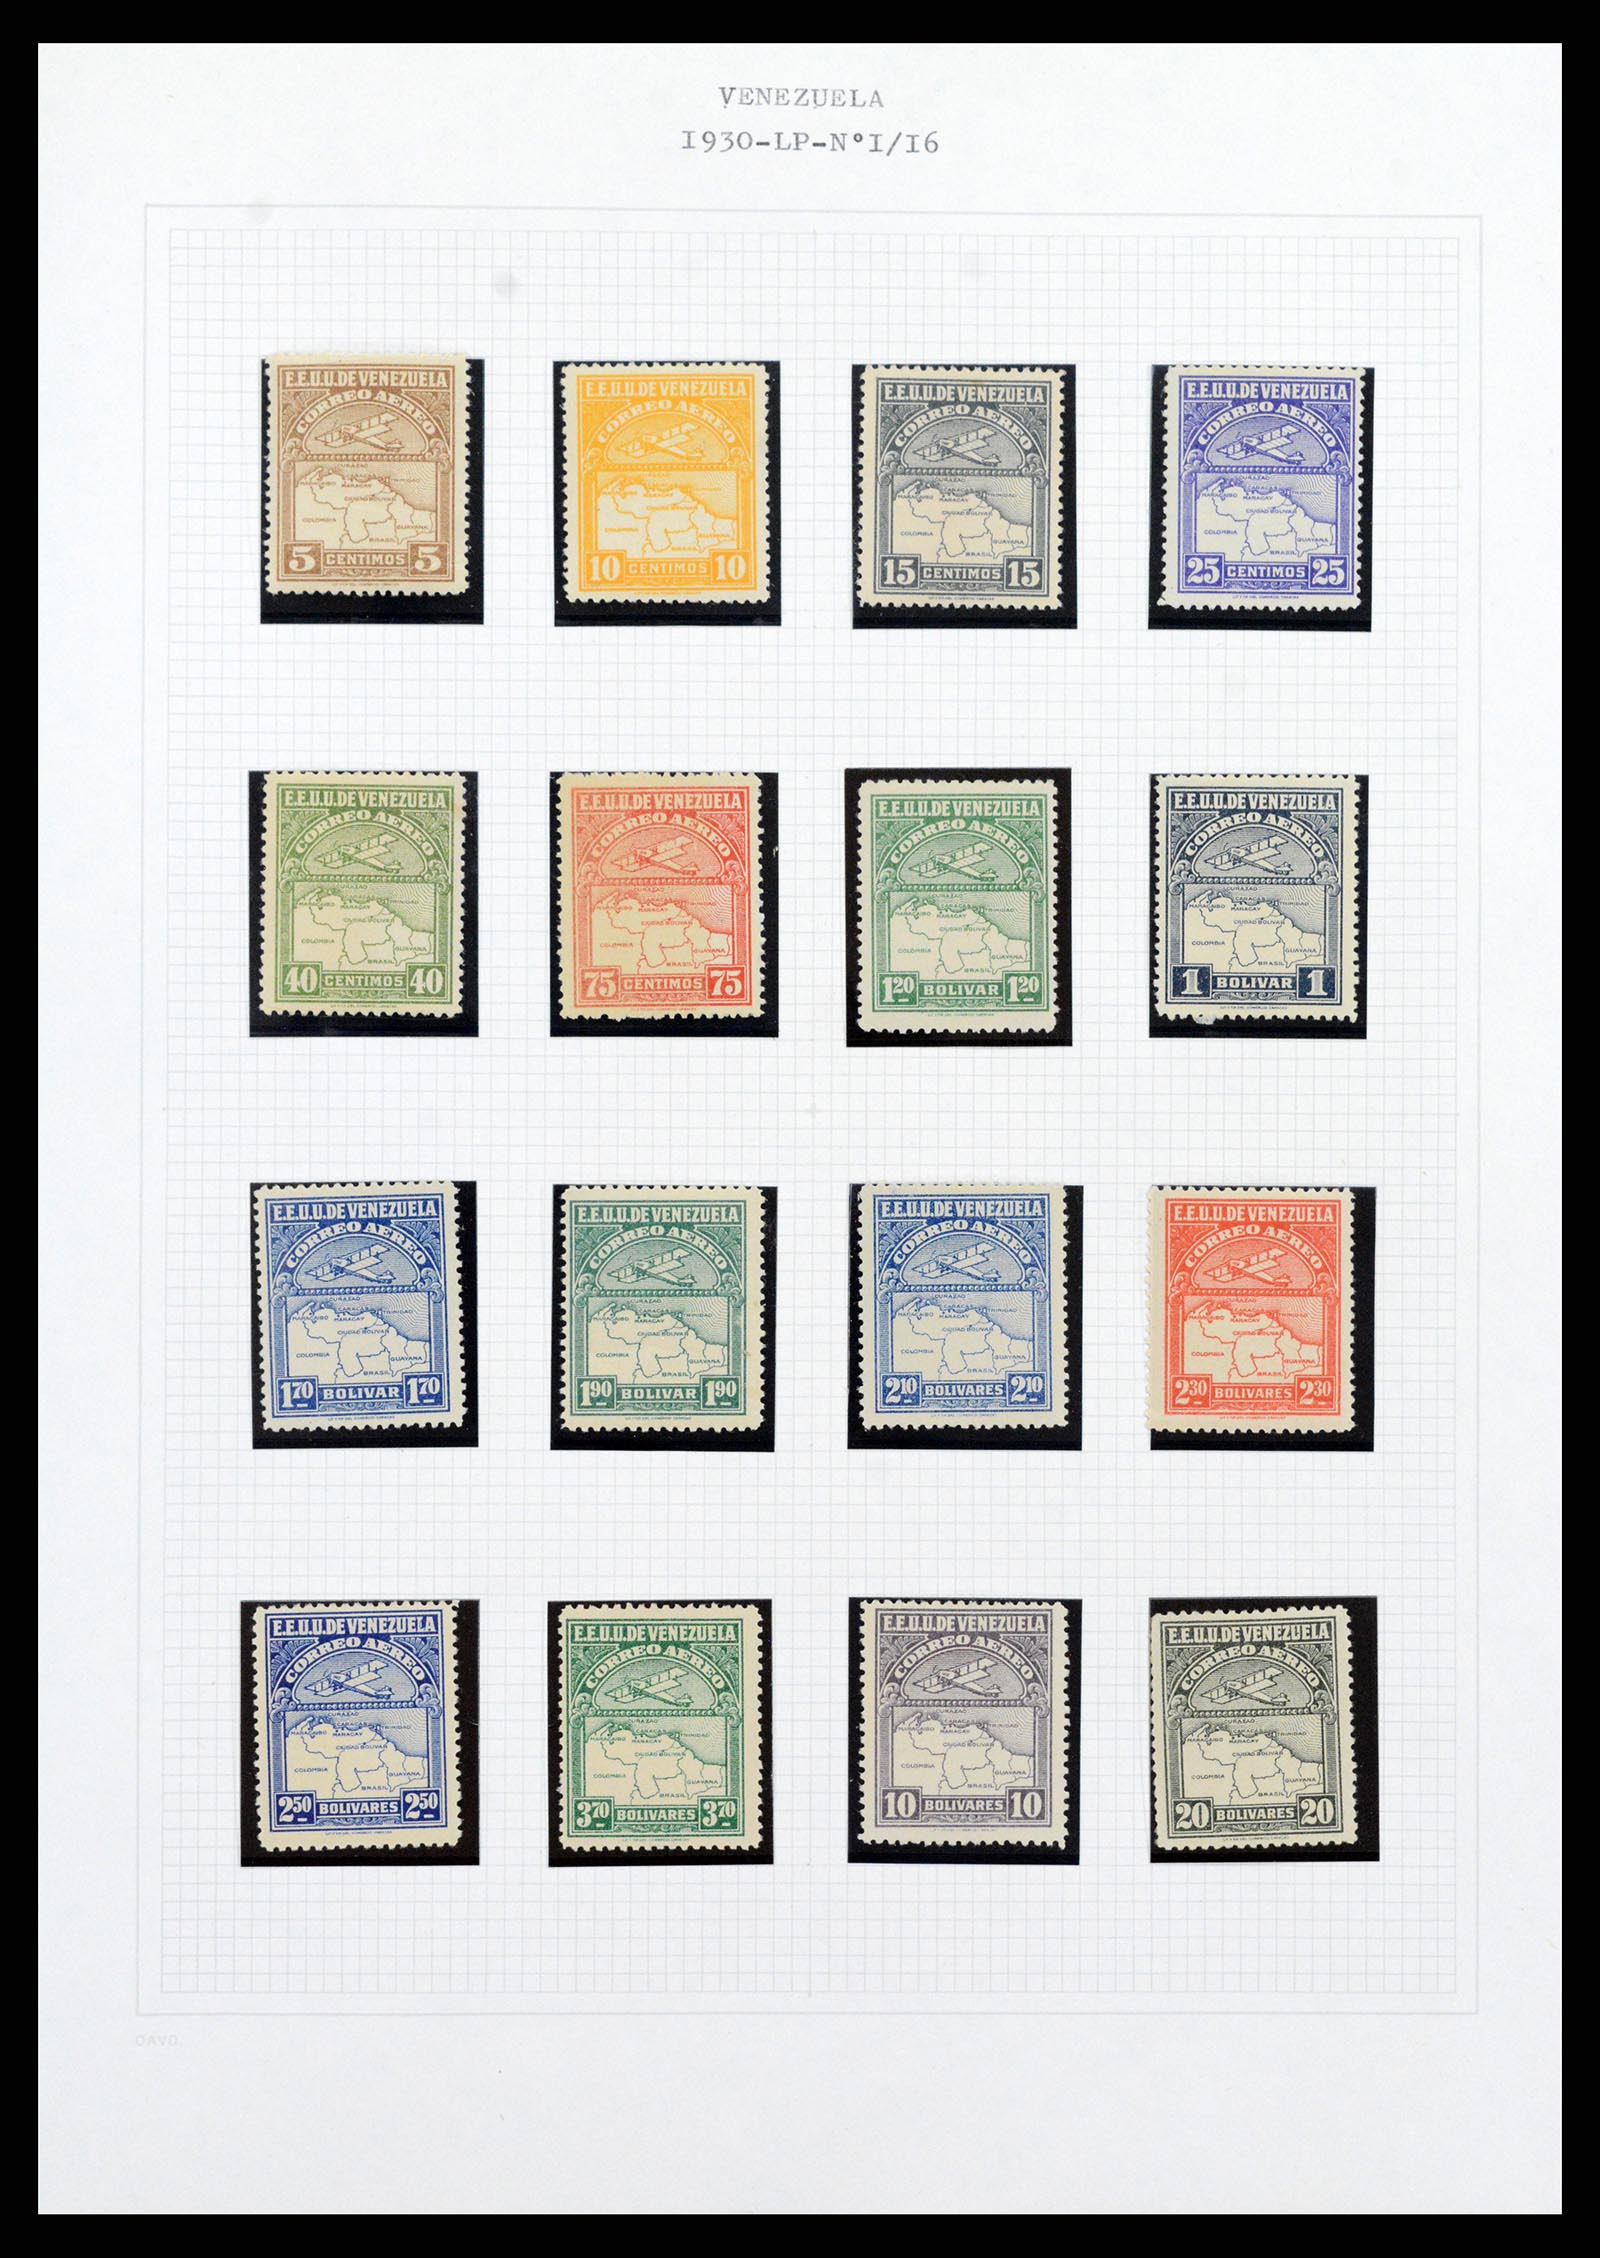 37353 051 - Stamp collection 37353 Venezuela 1880-1960.